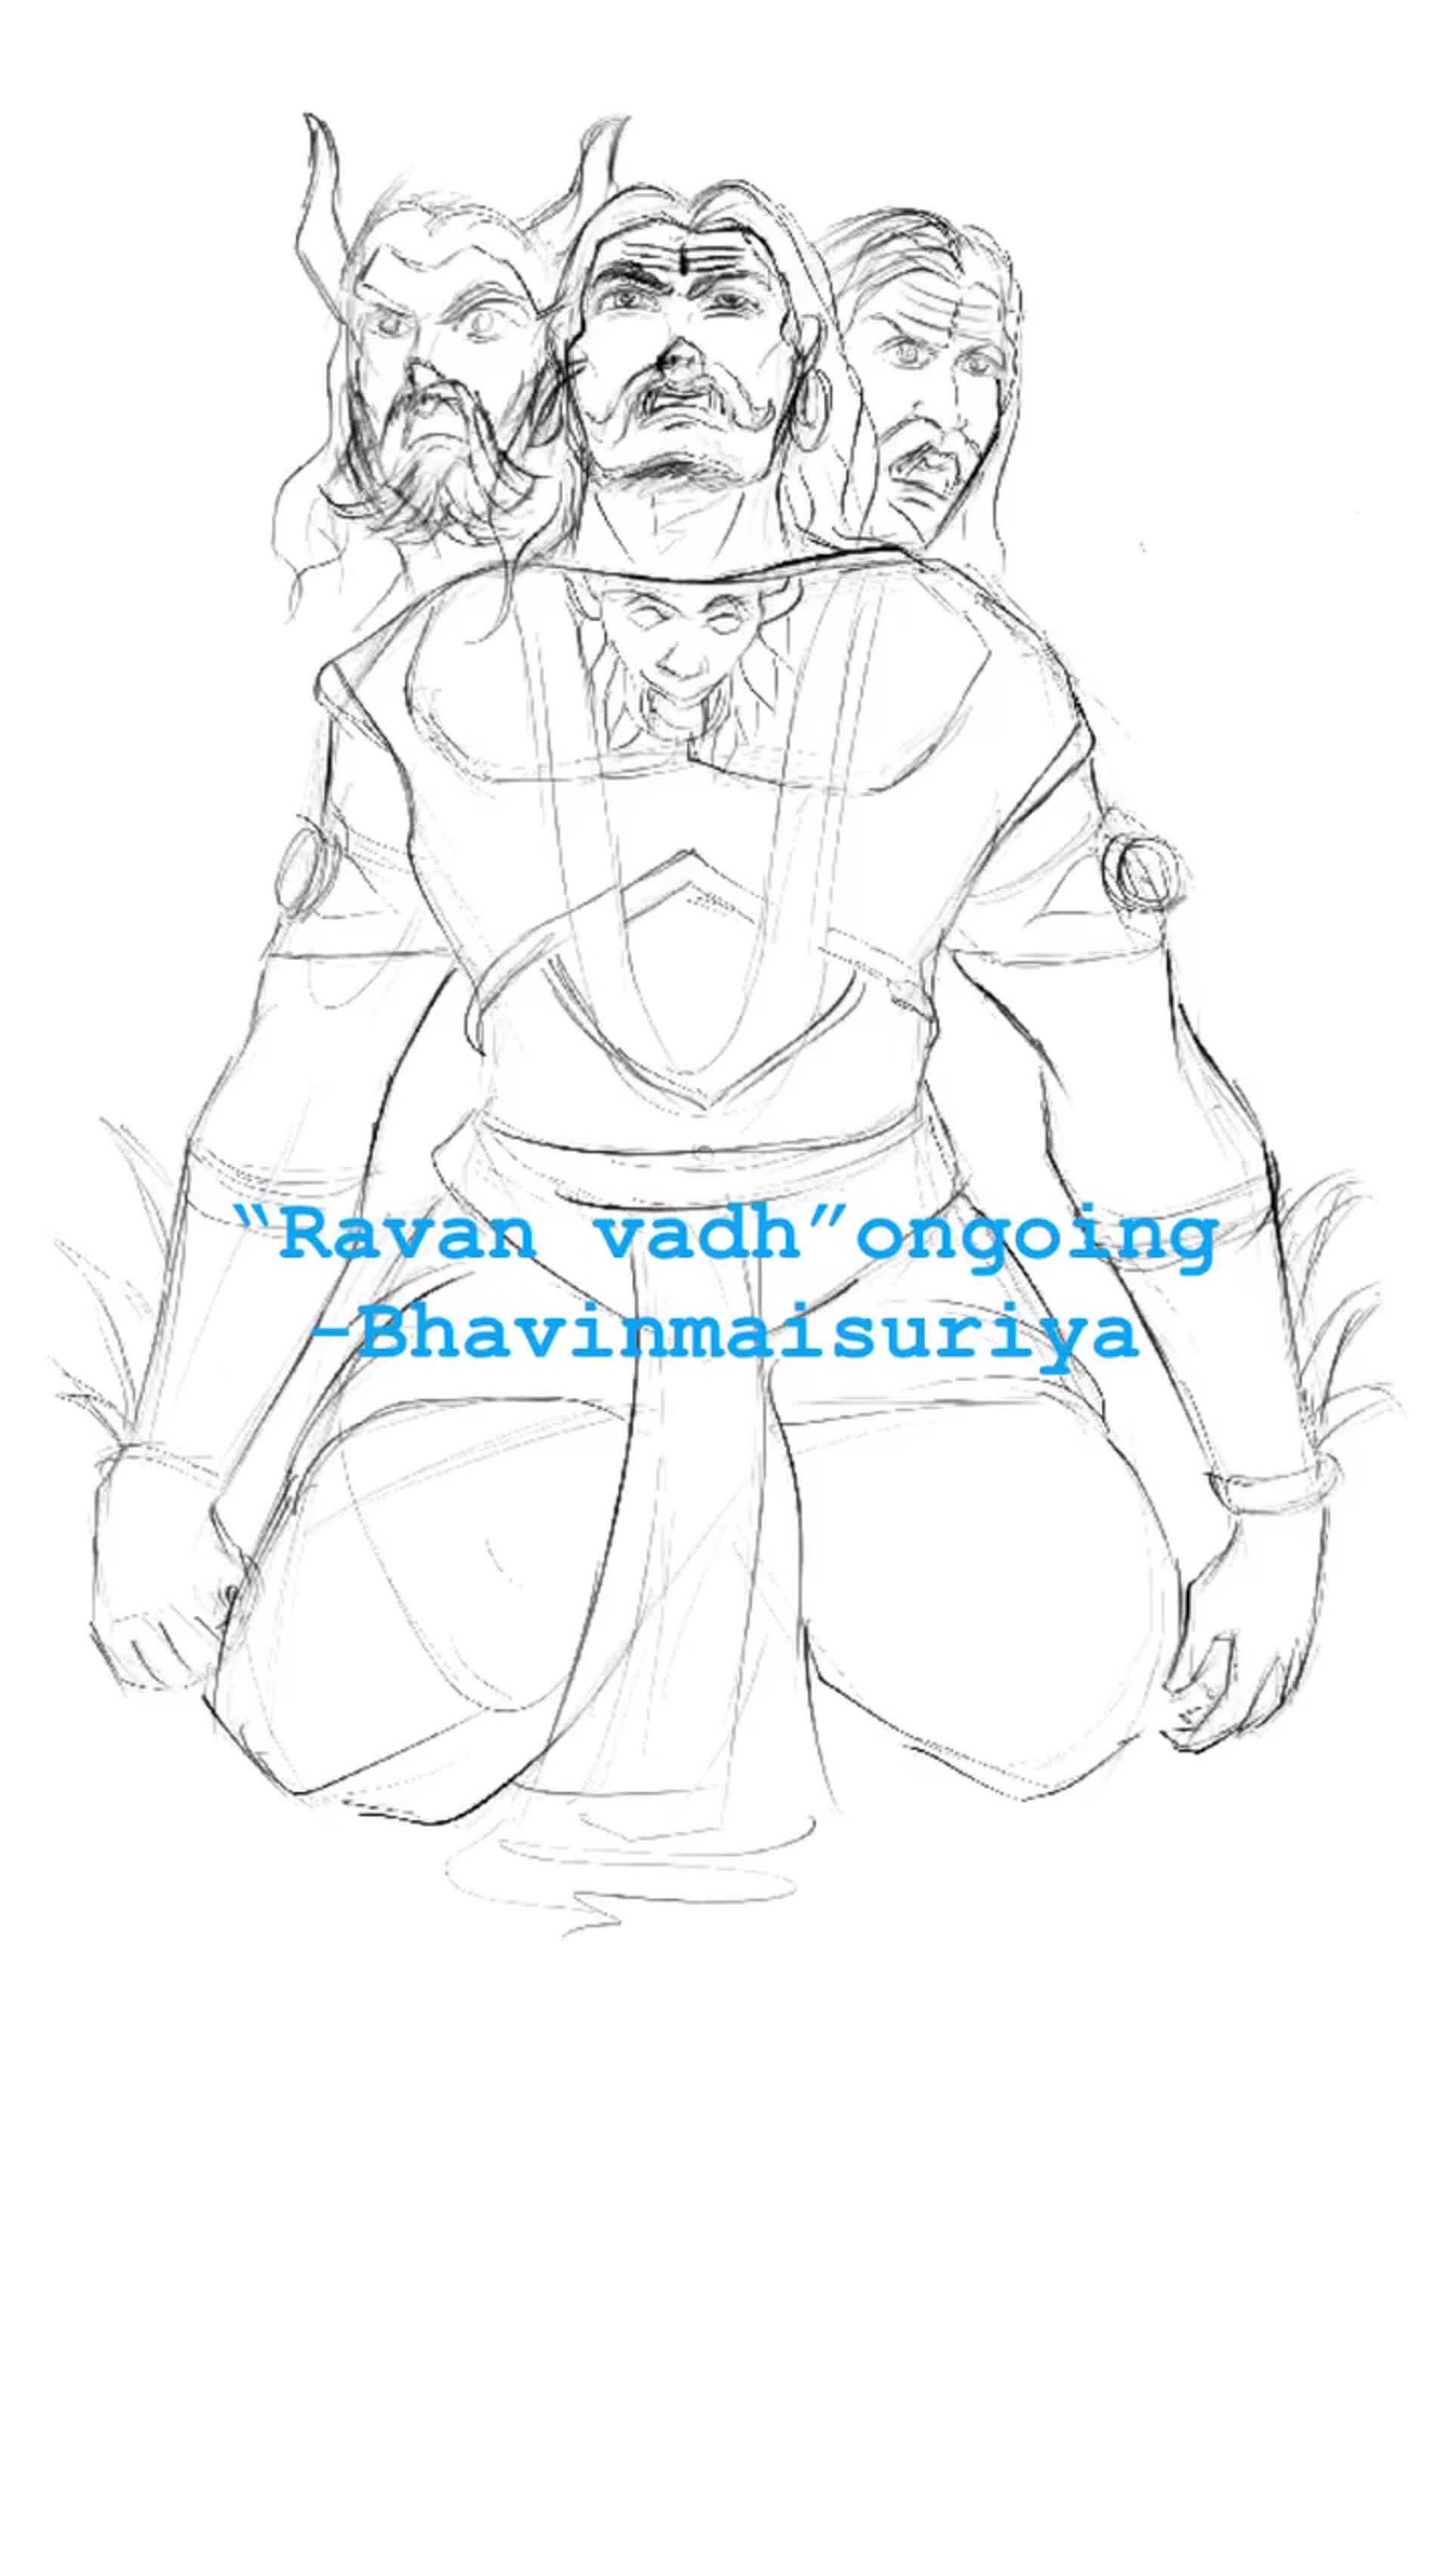 How to draw Ravan Vadh - Dussehra Festival - YouTube